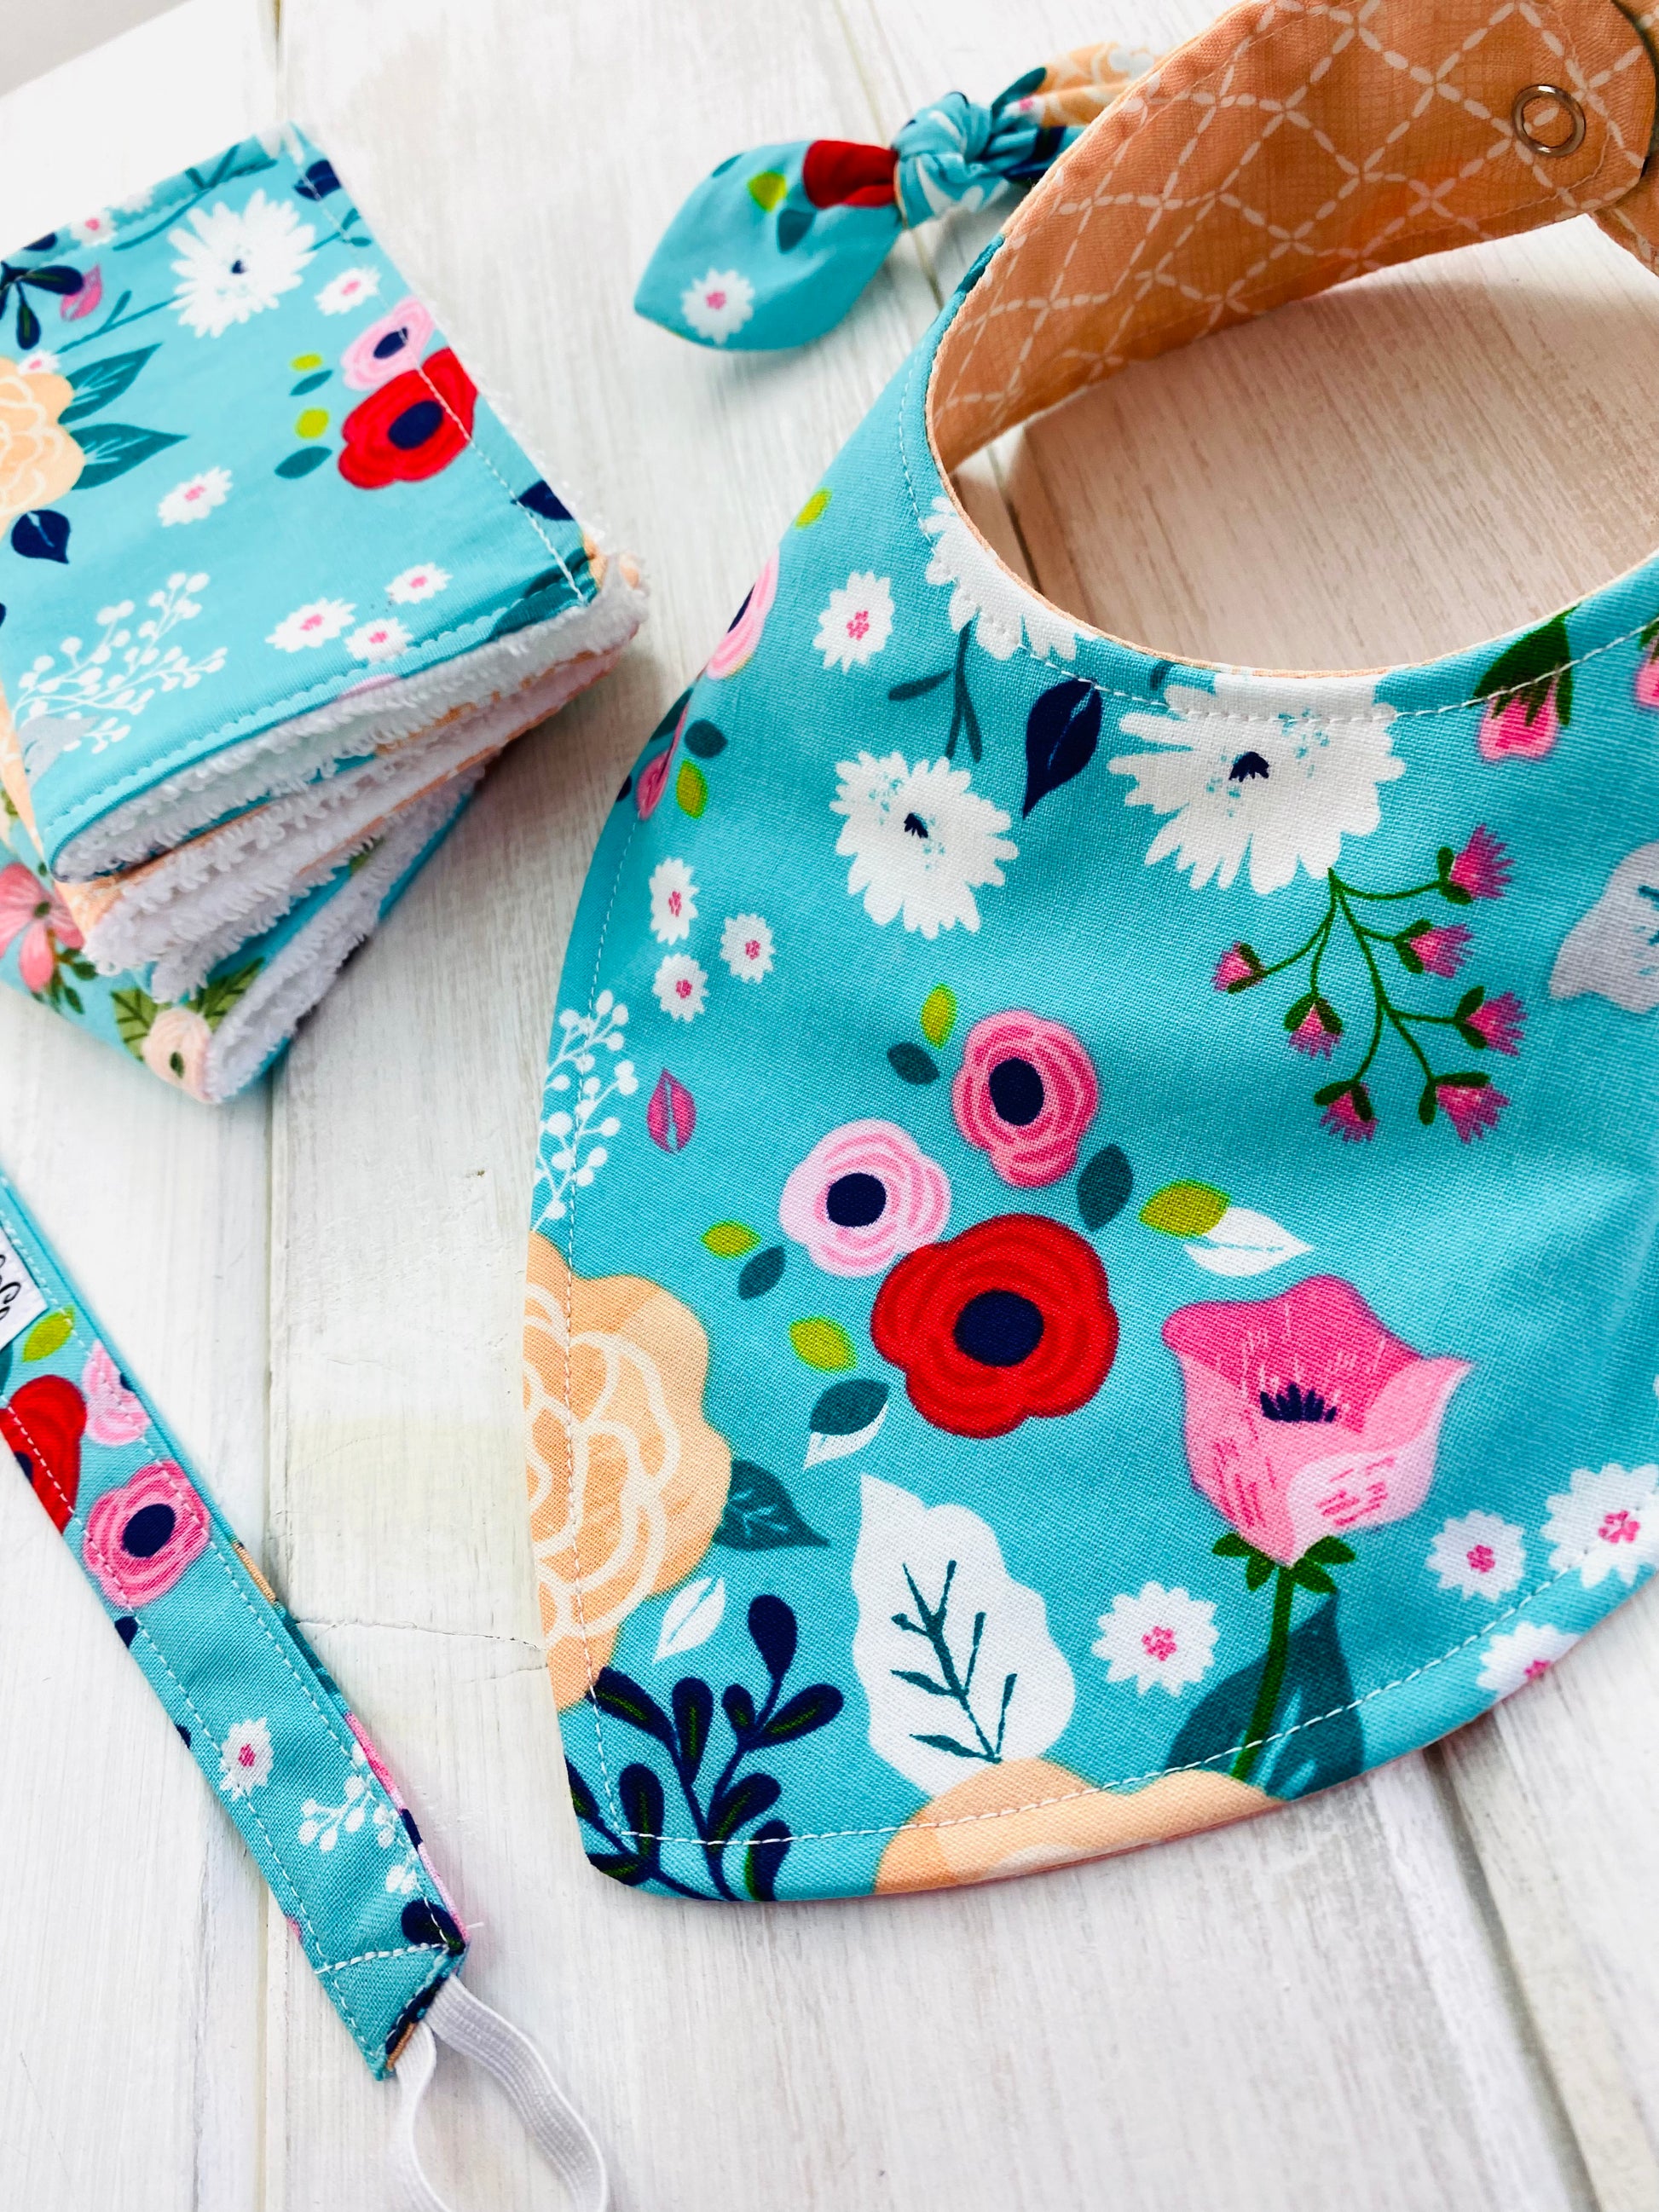 Designer baby accessories in bright floral print.